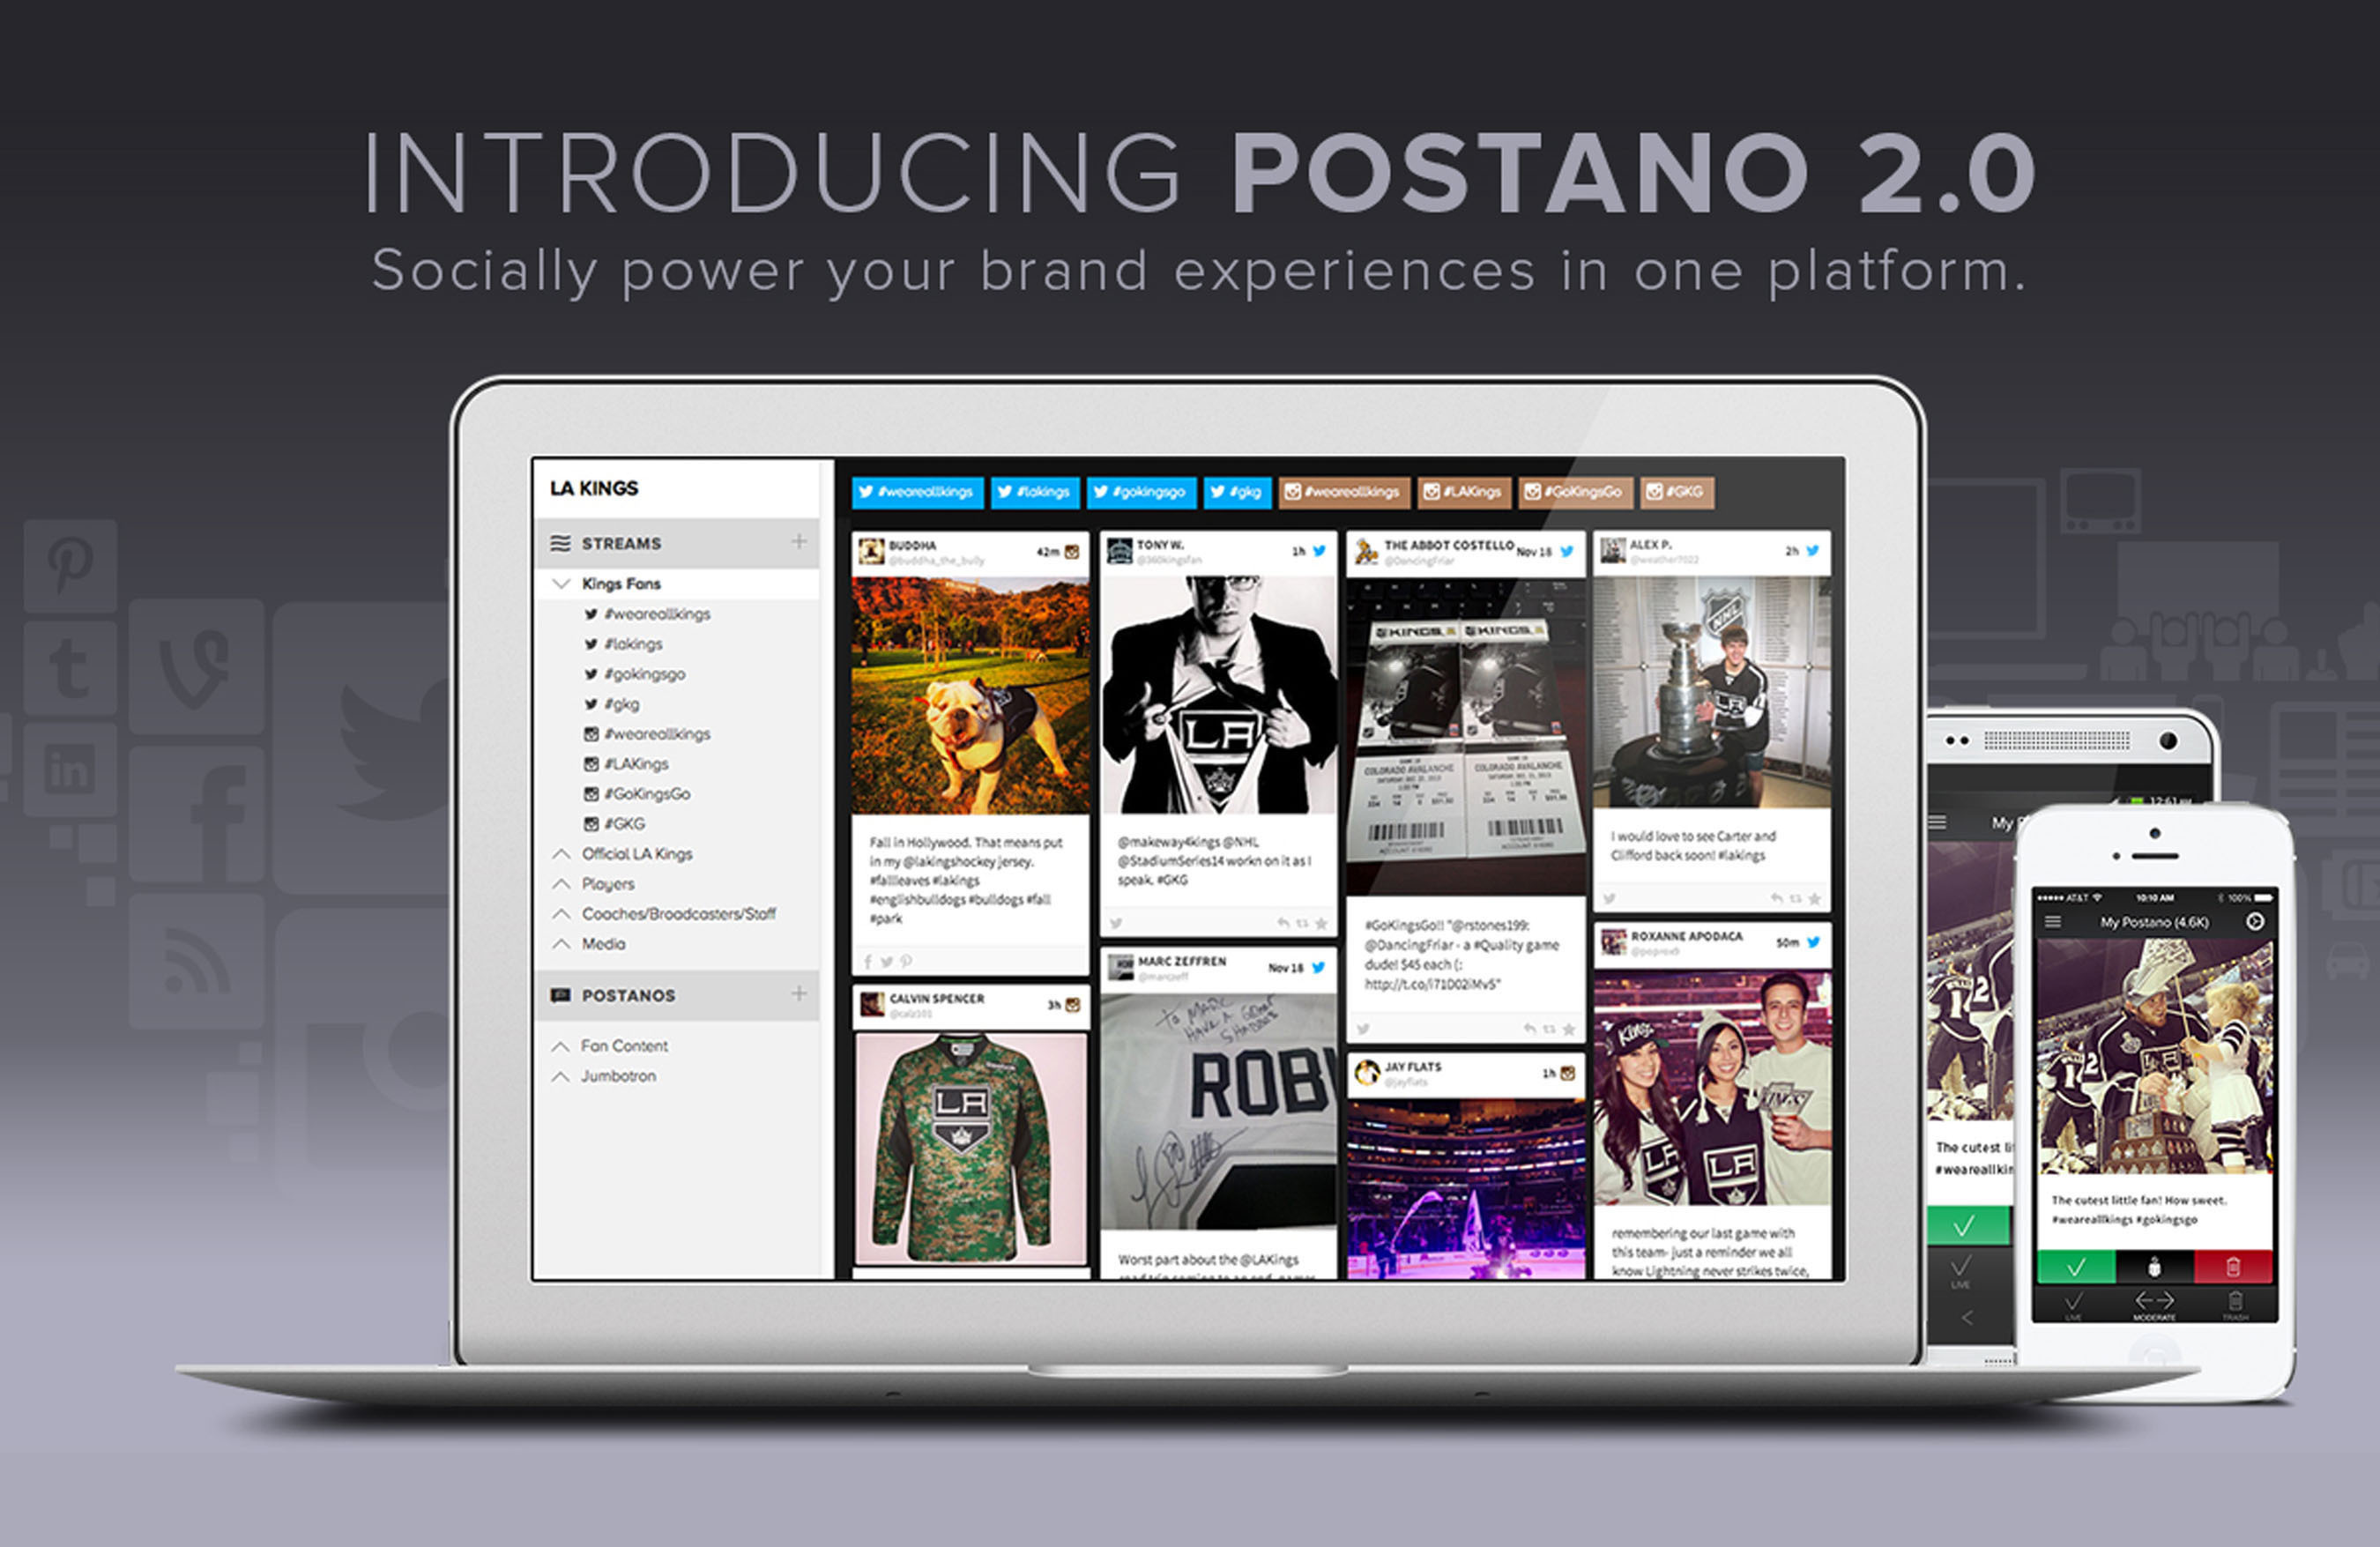 Introducing Postano 2.0. (PRNewsFoto/TigerLogic Corporation) (PRNewsFoto/TIGERLOGIC CORPORATION)